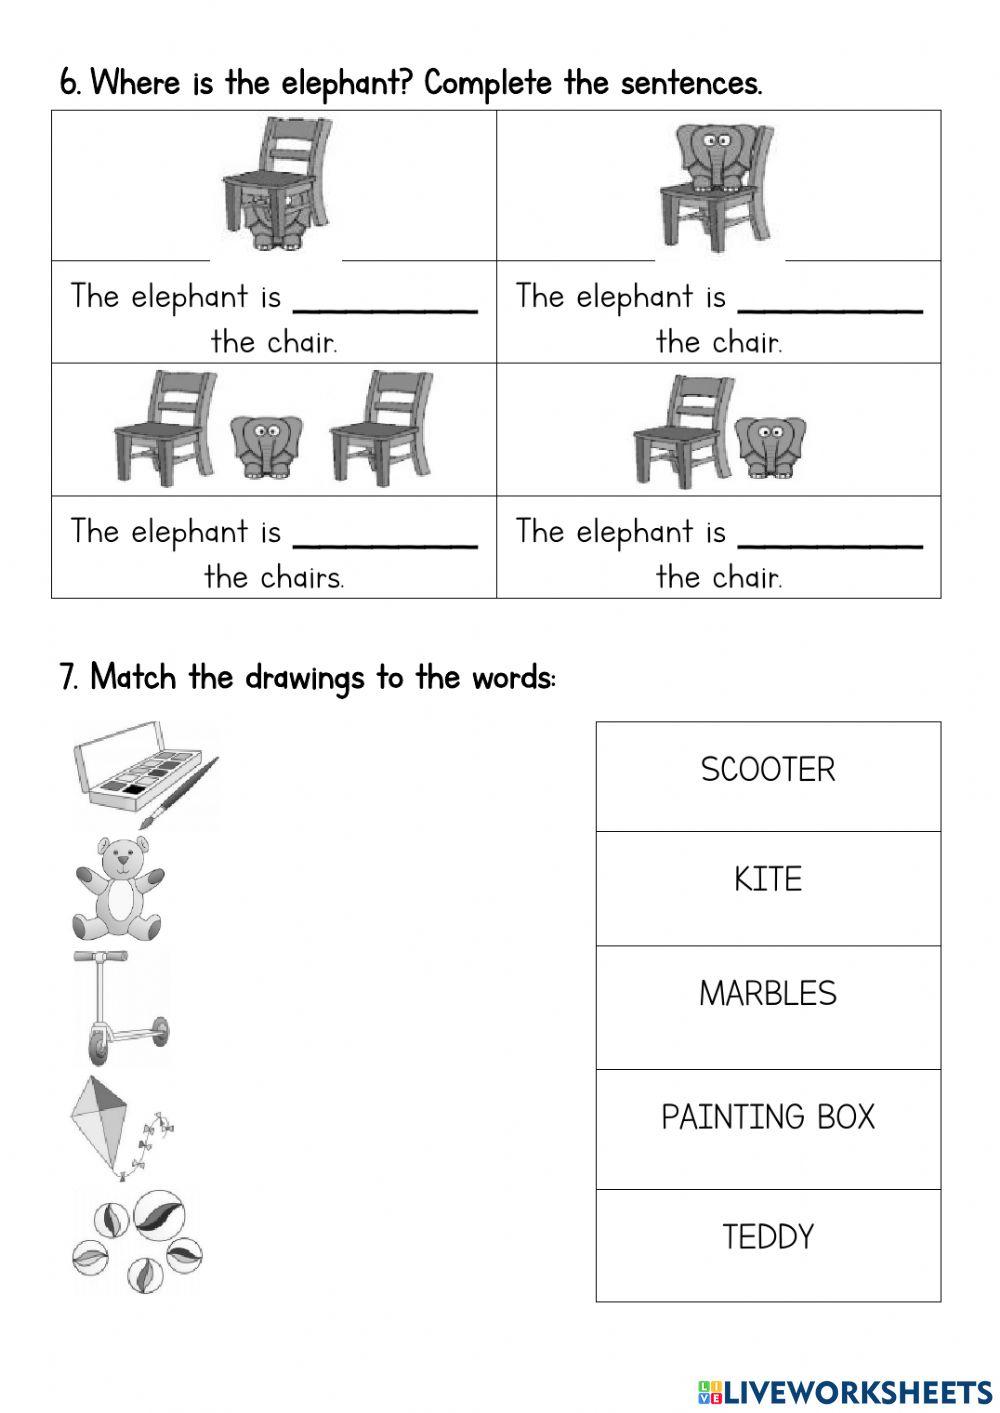 English test prepositions